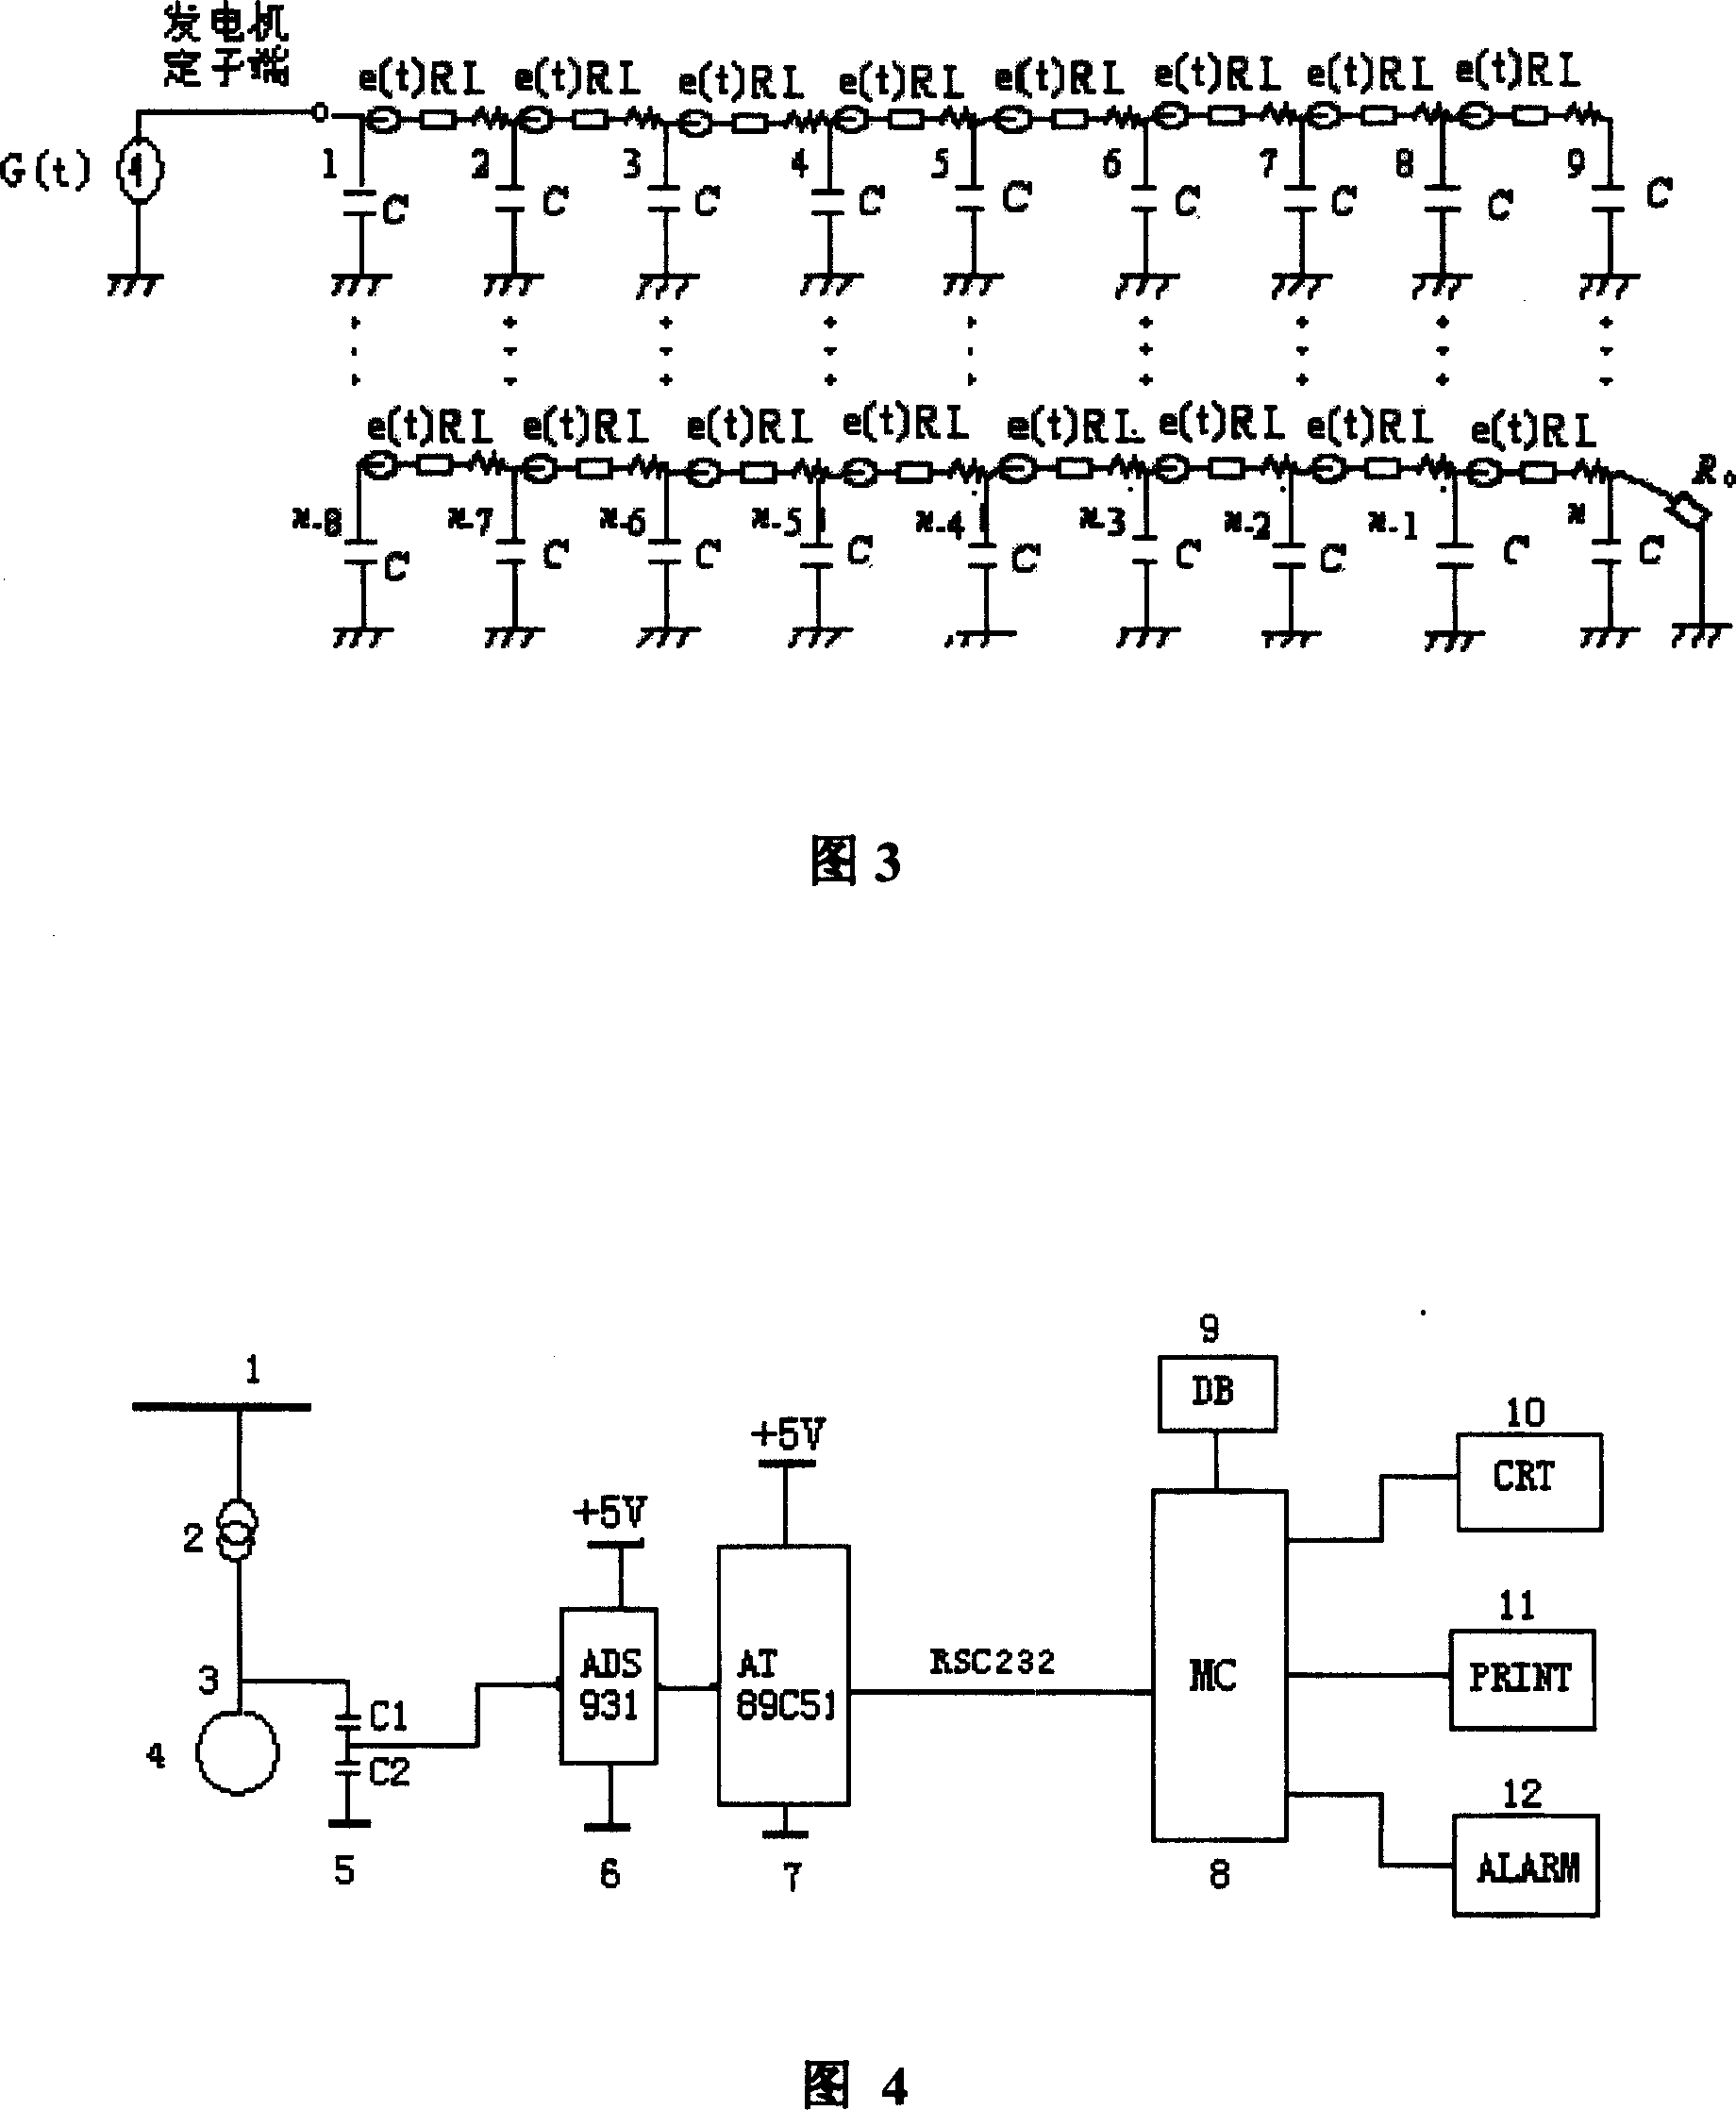 Method for predicting impulse over voltage of generator